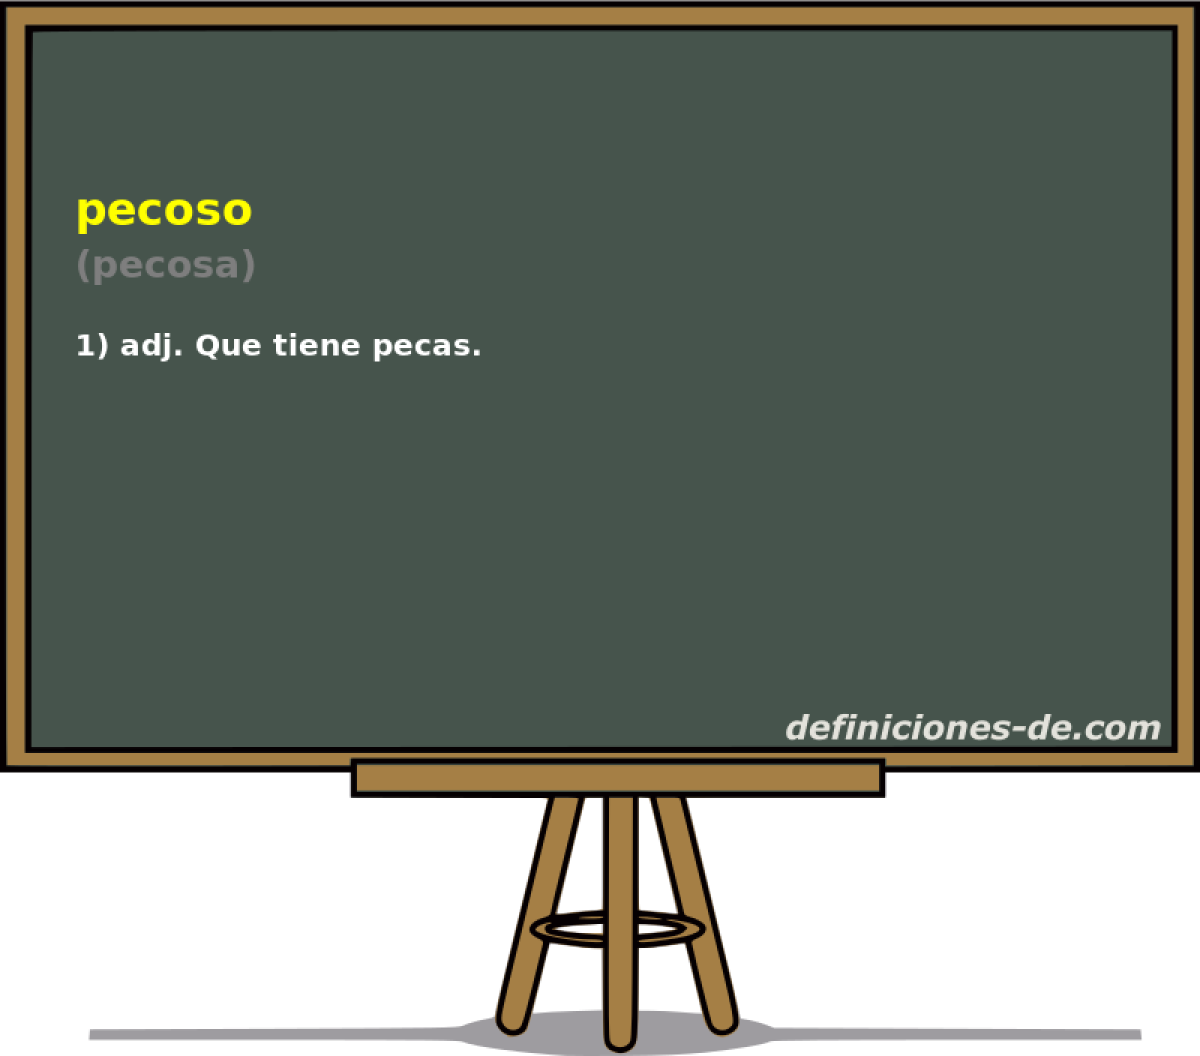 pecoso (pecosa)